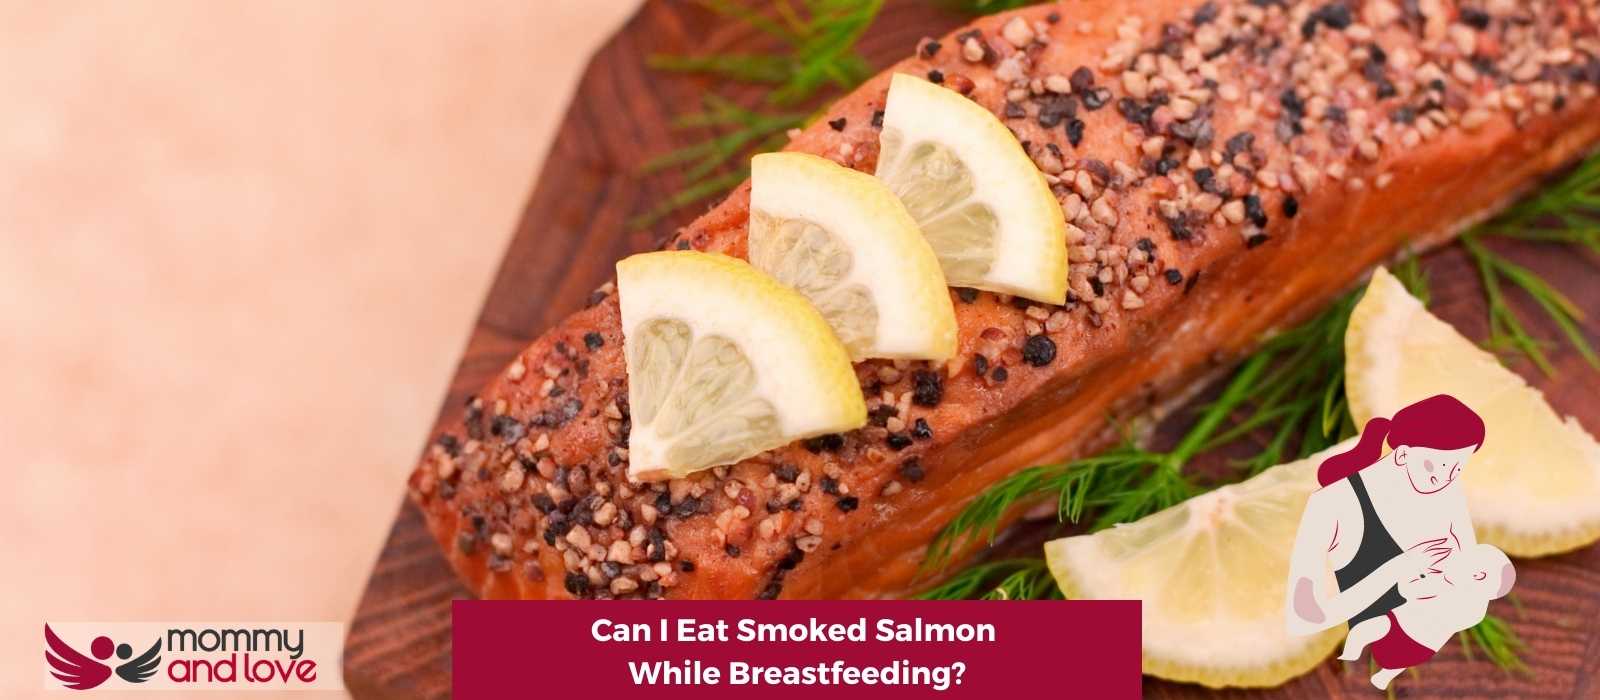 Can I Eat Smoked Salmon While Breastfeeding